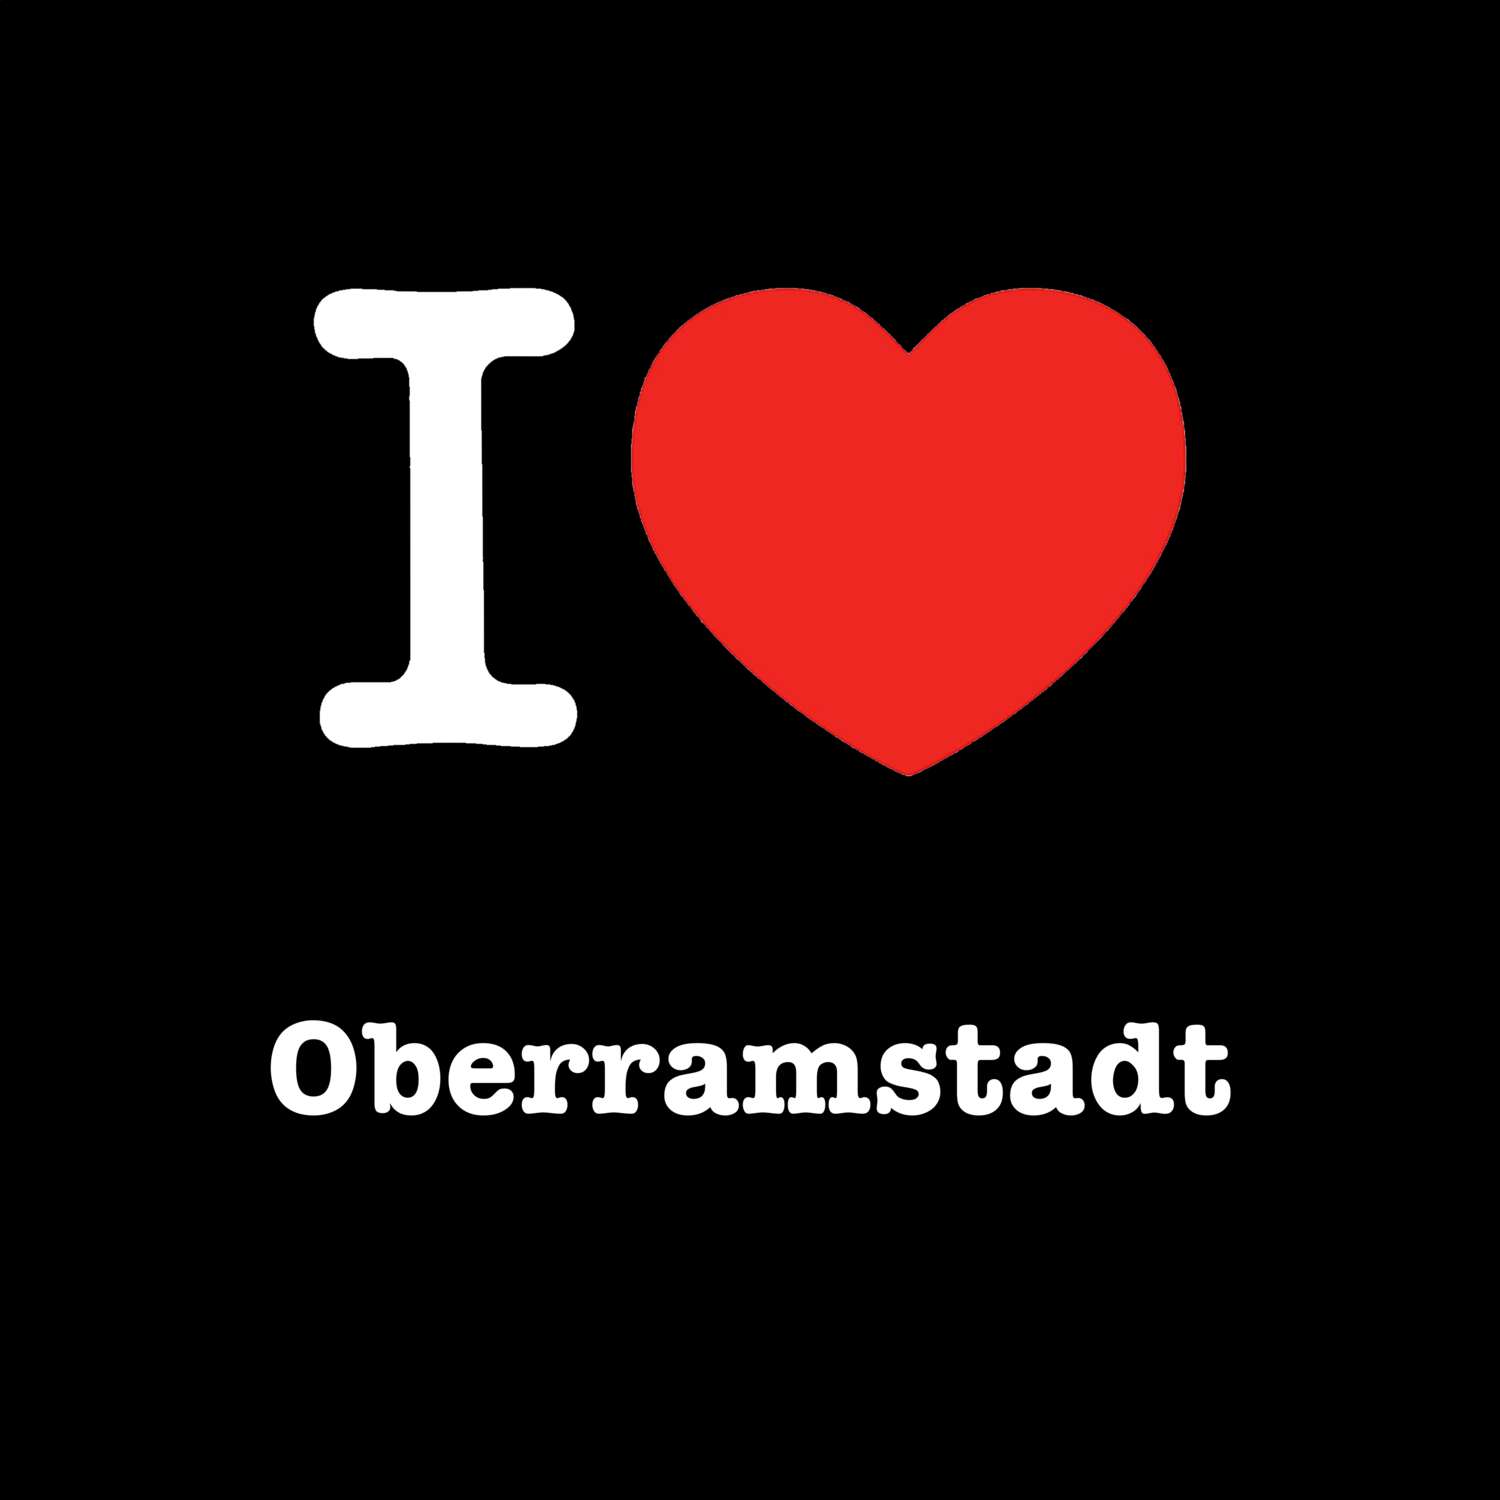 Oberramstadt T-Shirt »I love«